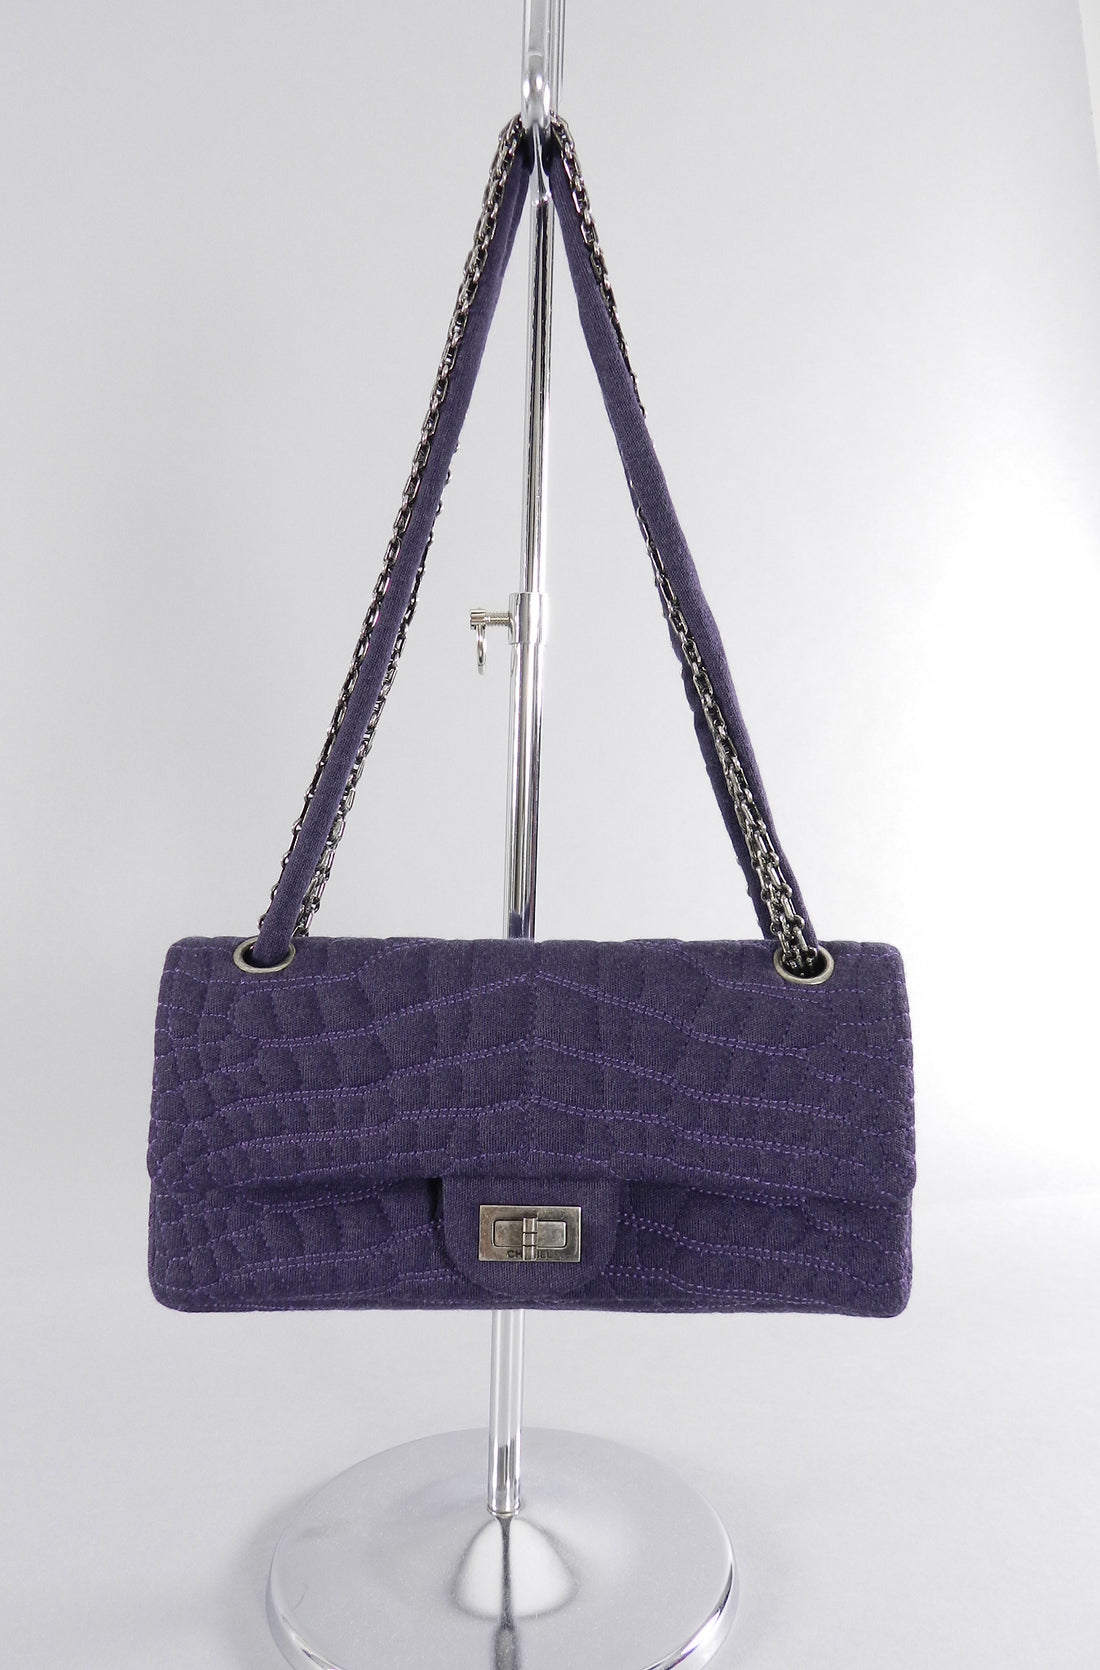 Chanel 07A Purple Knit Fabric Reissue East West Flap Bag